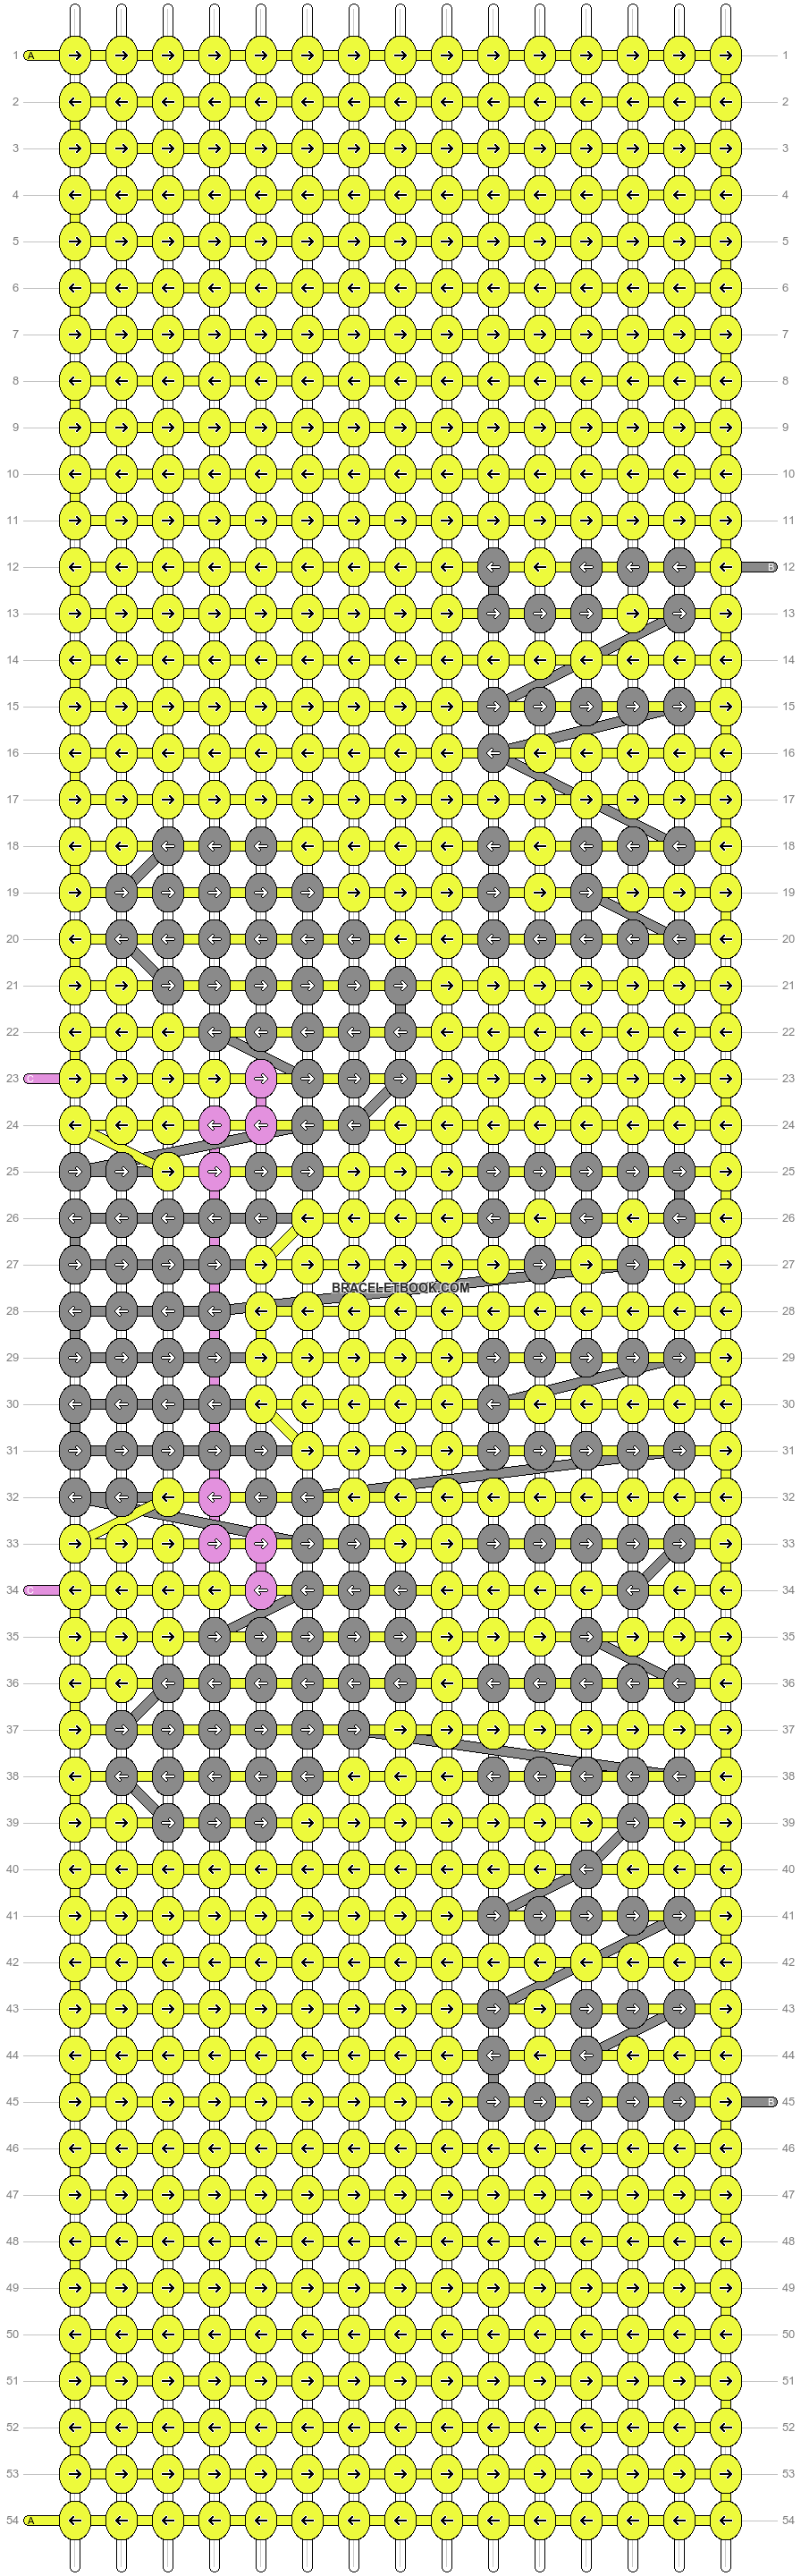 Alpha pattern #29975 variation #66716 pattern